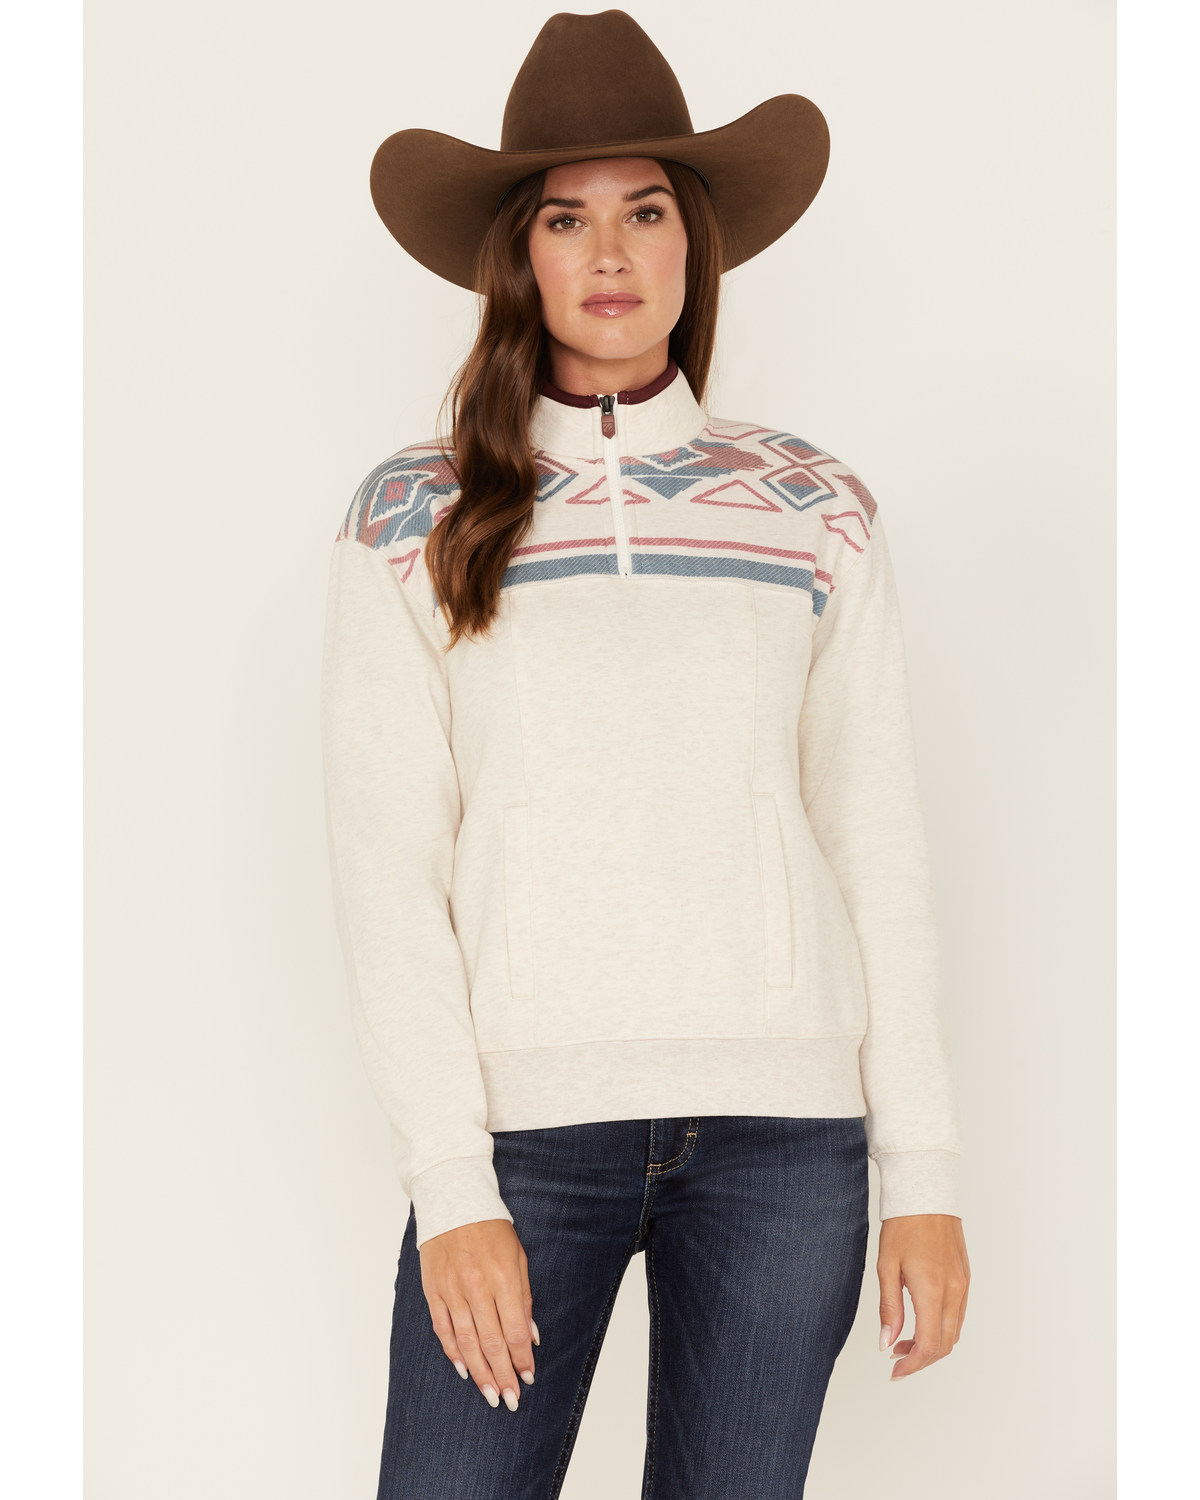 RANK 45® Women's 1/4 Zip Southwestern Print Contrast Pullover